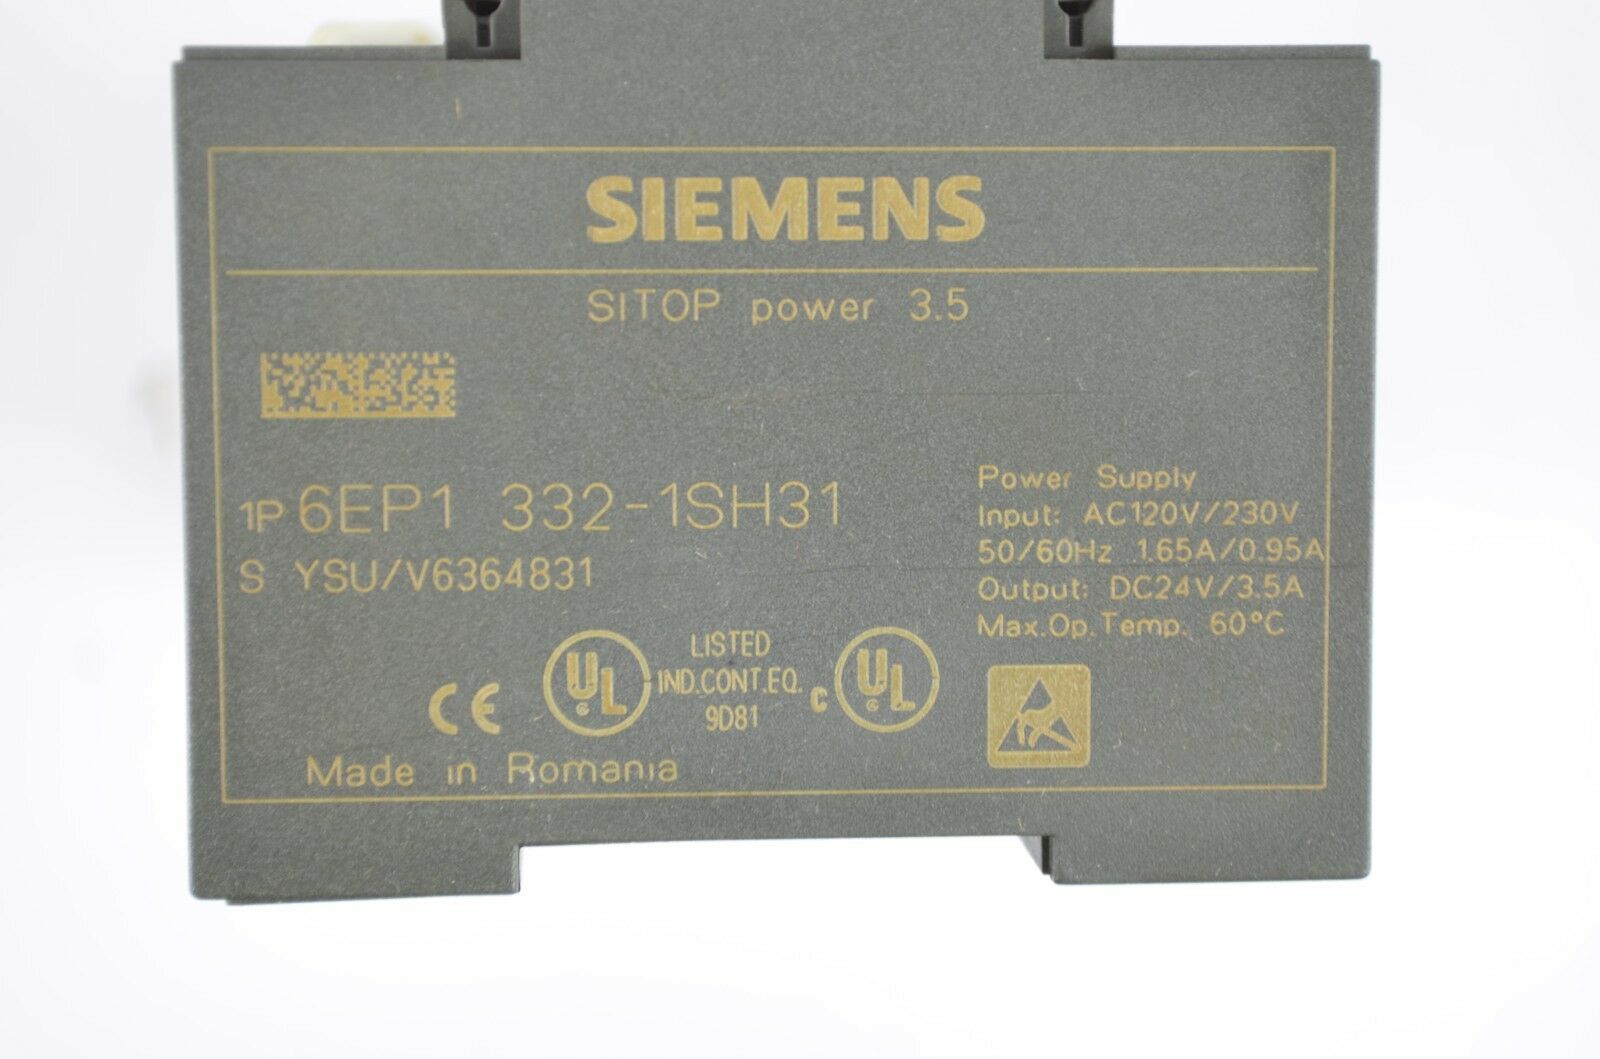 Siemens sitop power 3.5 A Univ. Stromversorgung 6EP1 332-1SH31 ( 6EP1332-1SH31 )